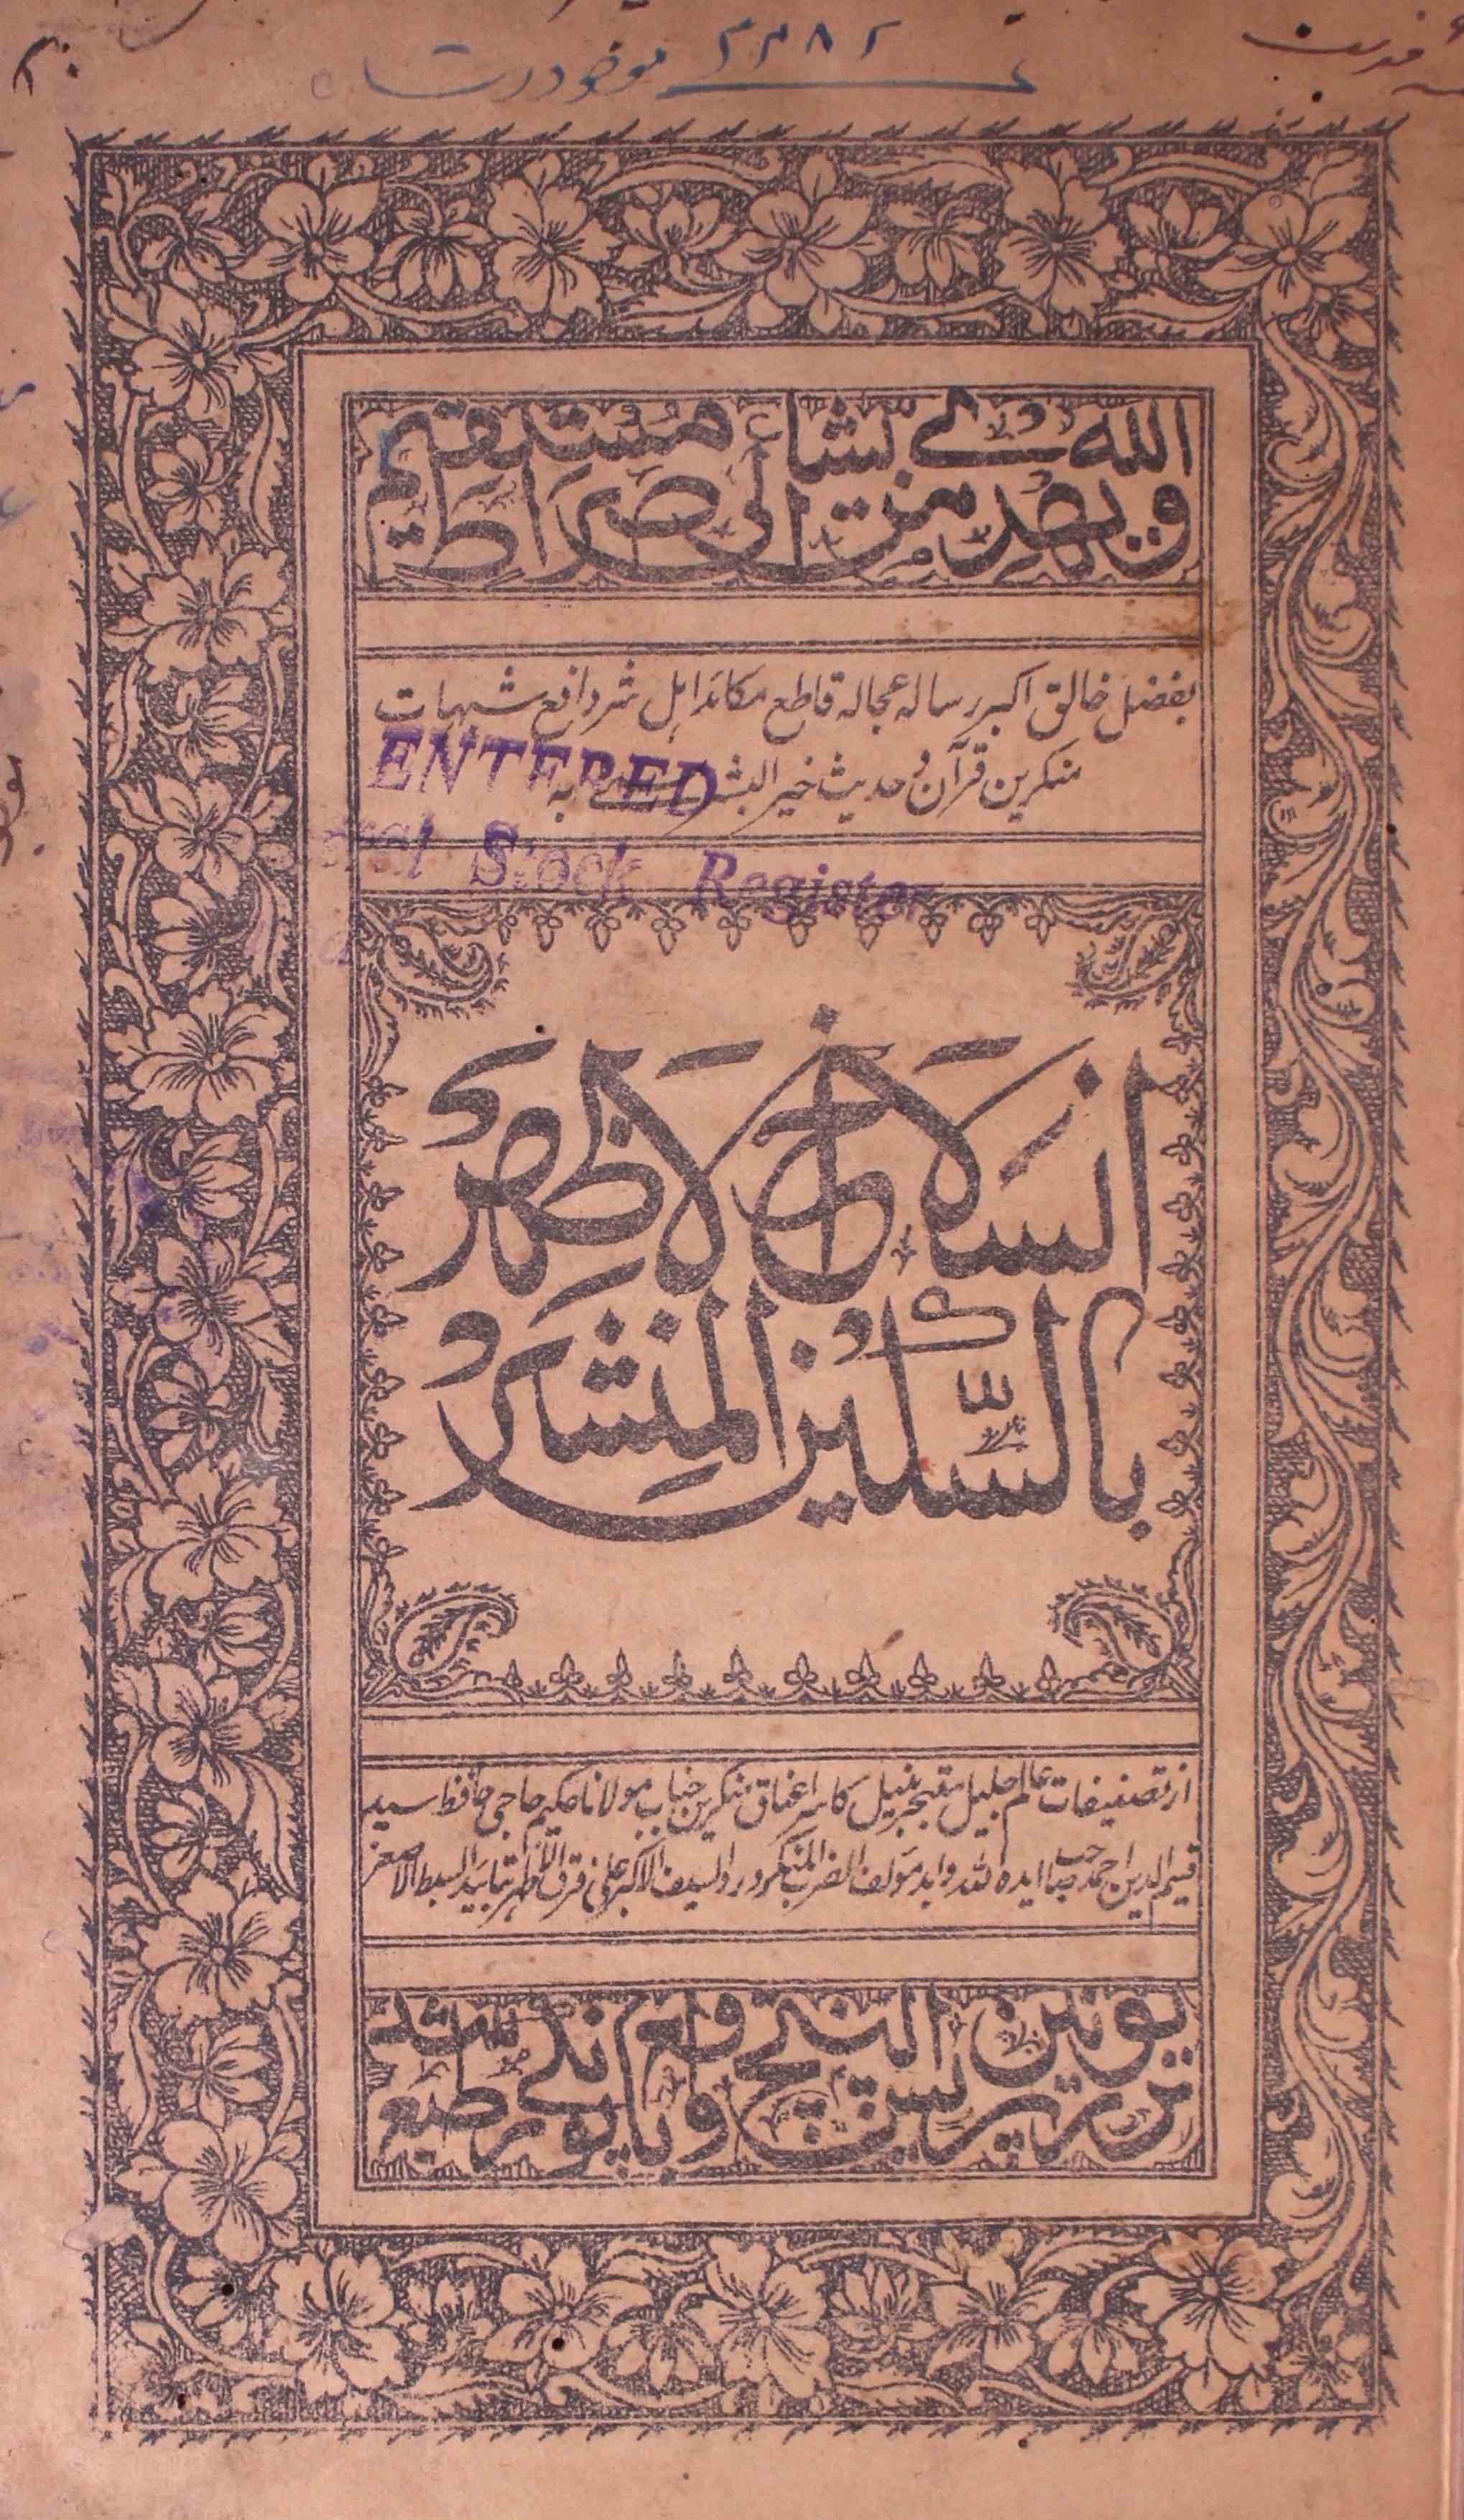 Insilakh-ul-Azhar Bissikkeenil Minshar